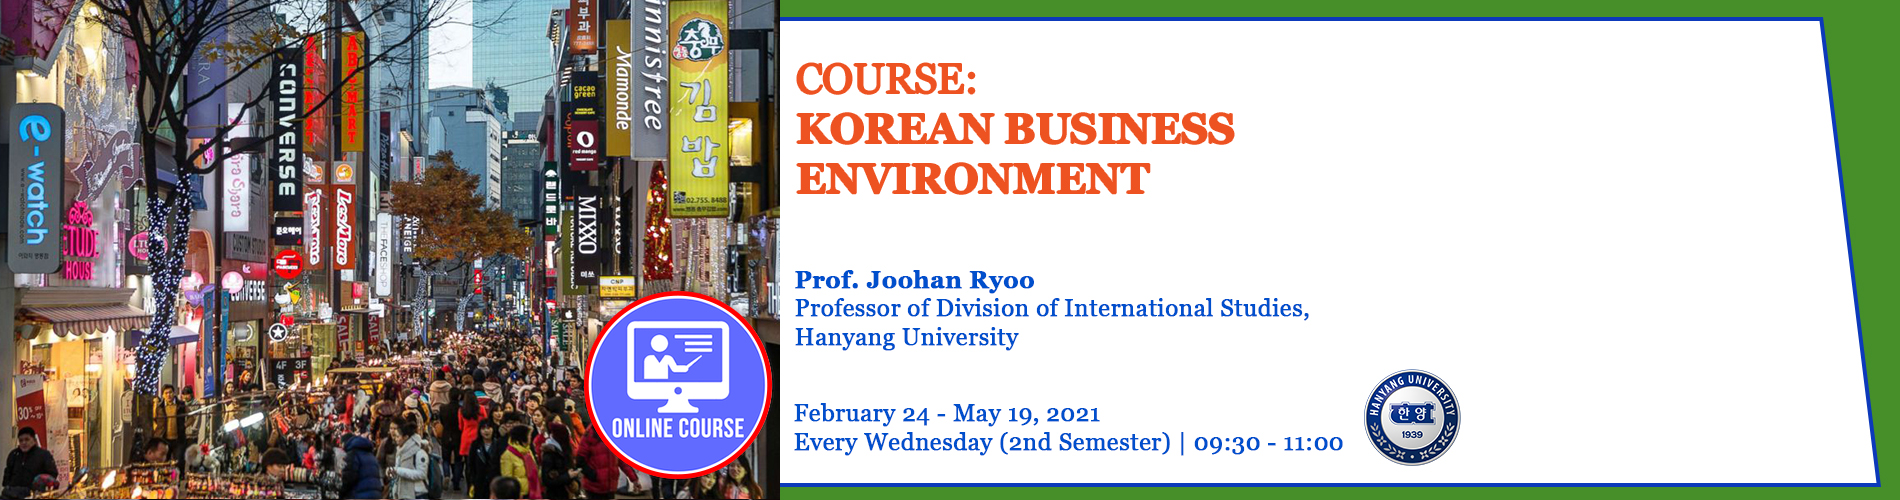 2021.02.24-05.19 - Korean Business Environment